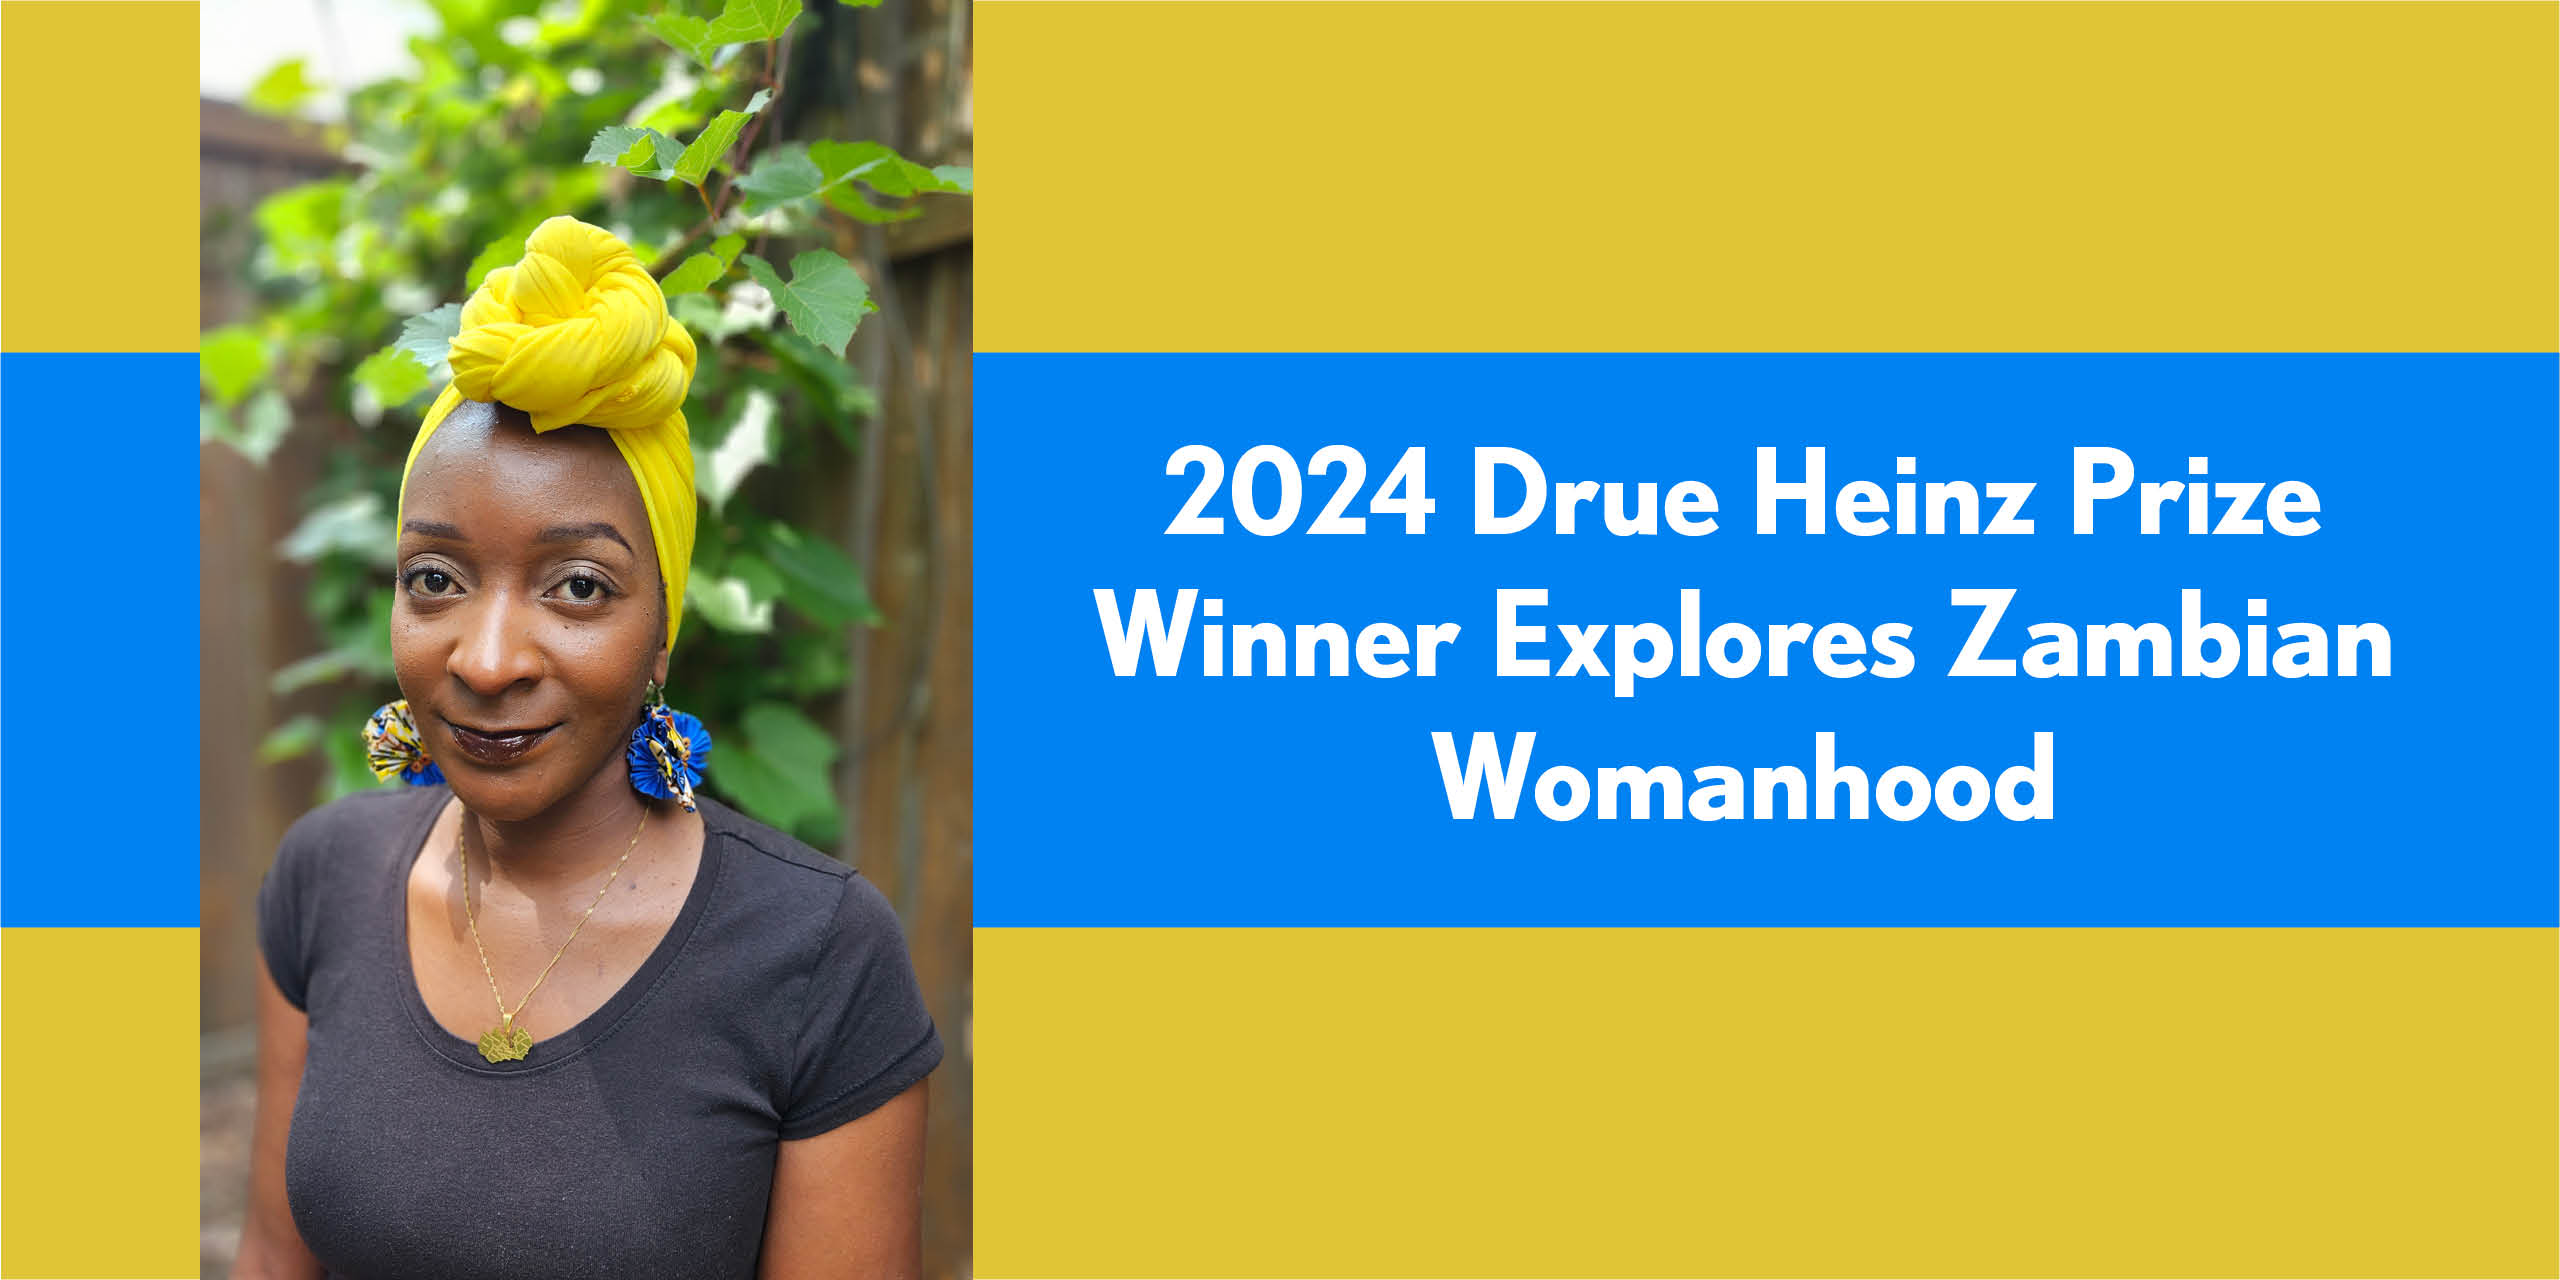 Drue Heinz Literature Prize Winner Explores Zambian Womanhood